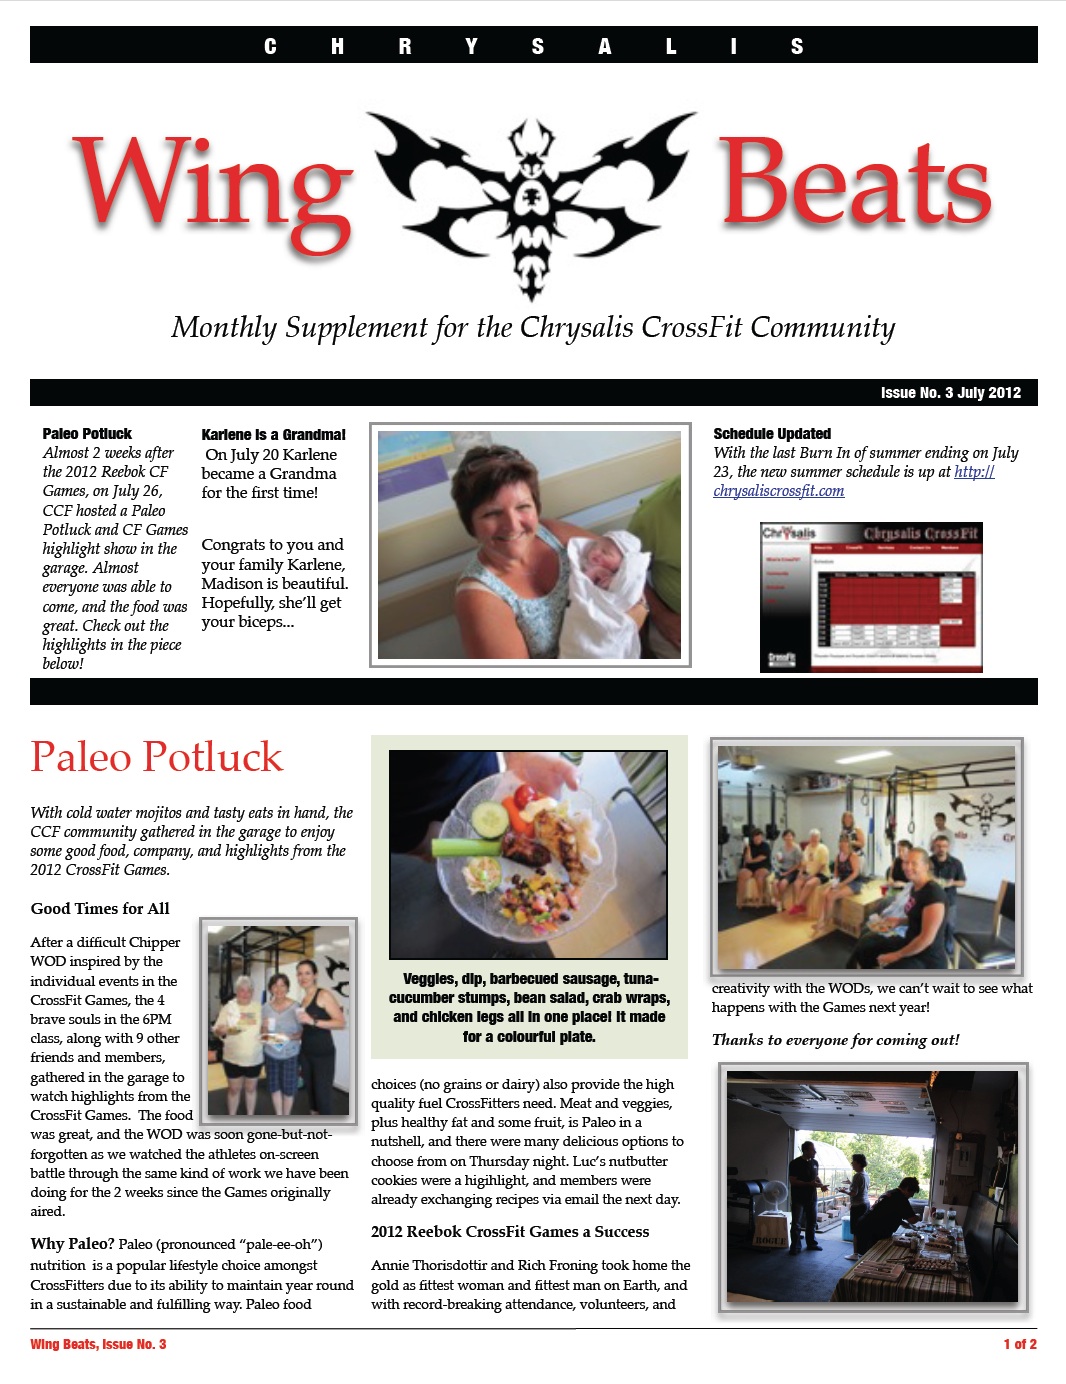 WingBeats Issue #3 - July 2012